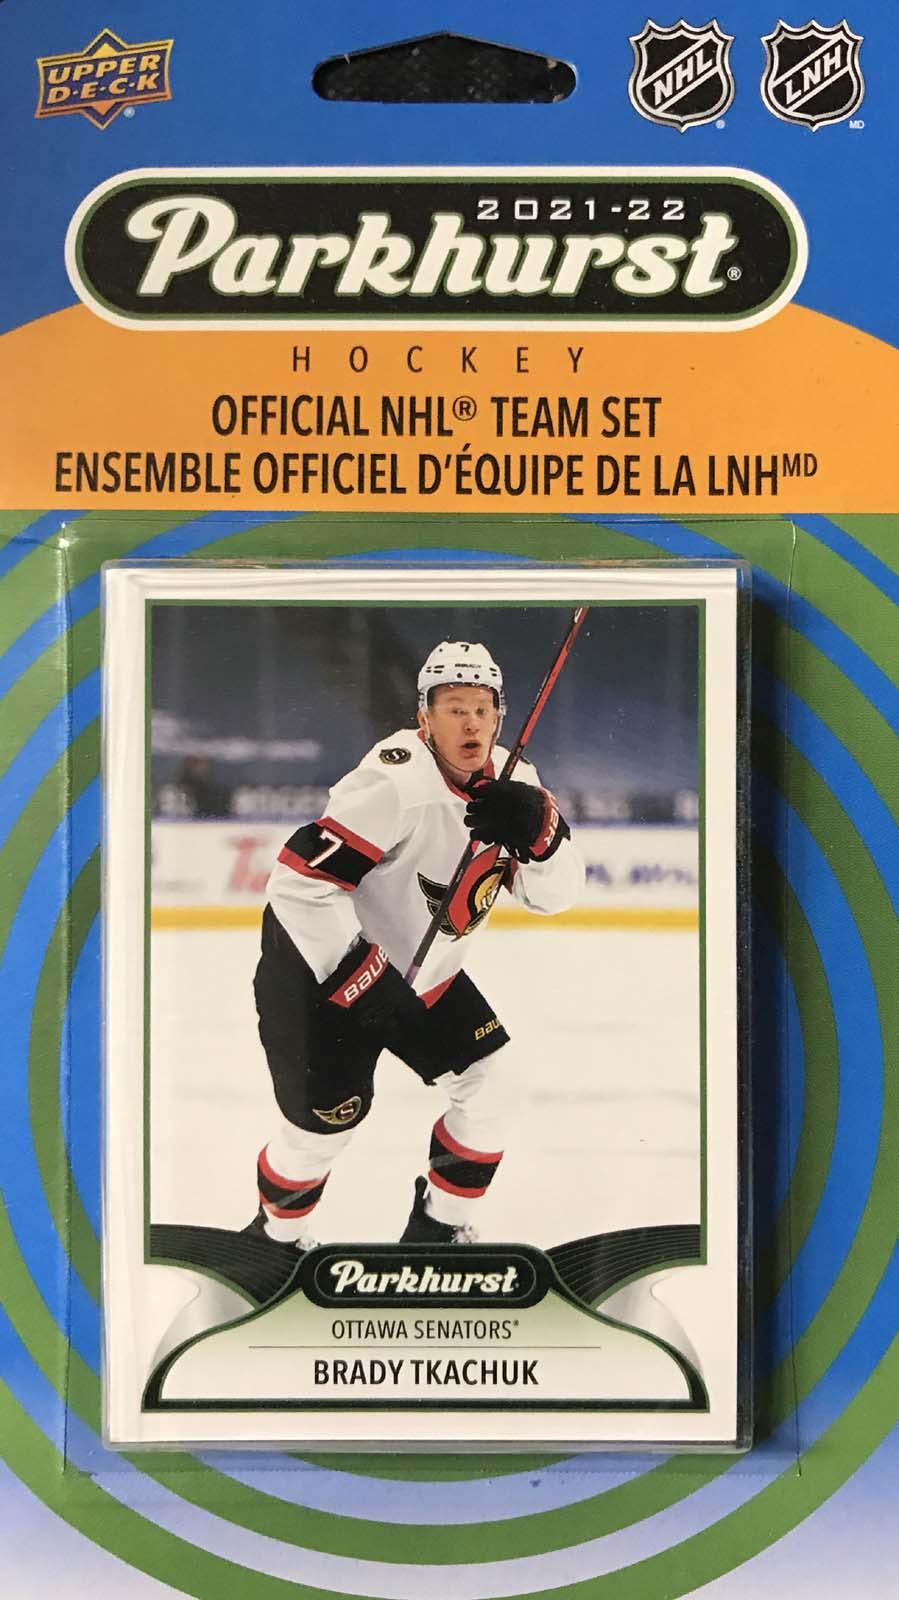 Hockey - 2021/22 - Upper Deck Parkhurst - Ottawa Senators Factory Set (10 Cards) - Hobby Champion Inc